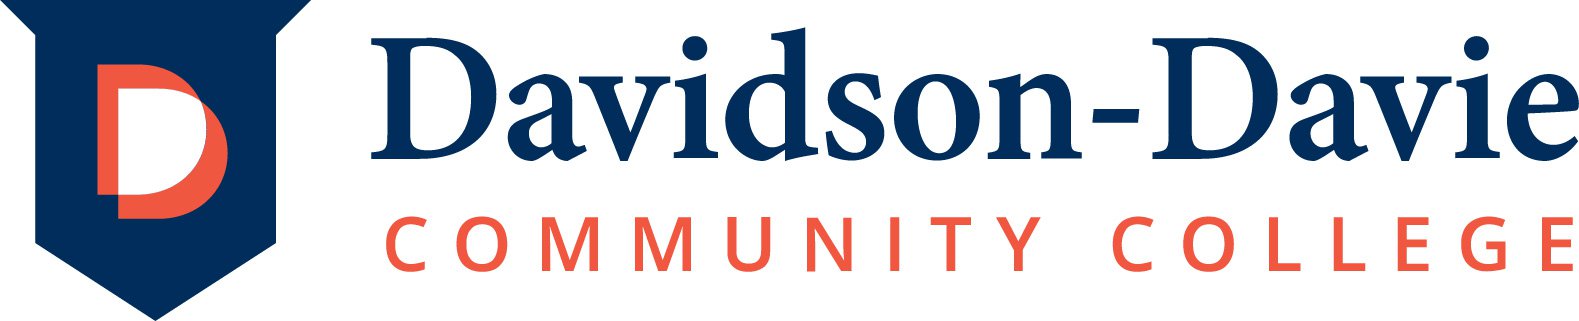 Davidson-Davie Community College